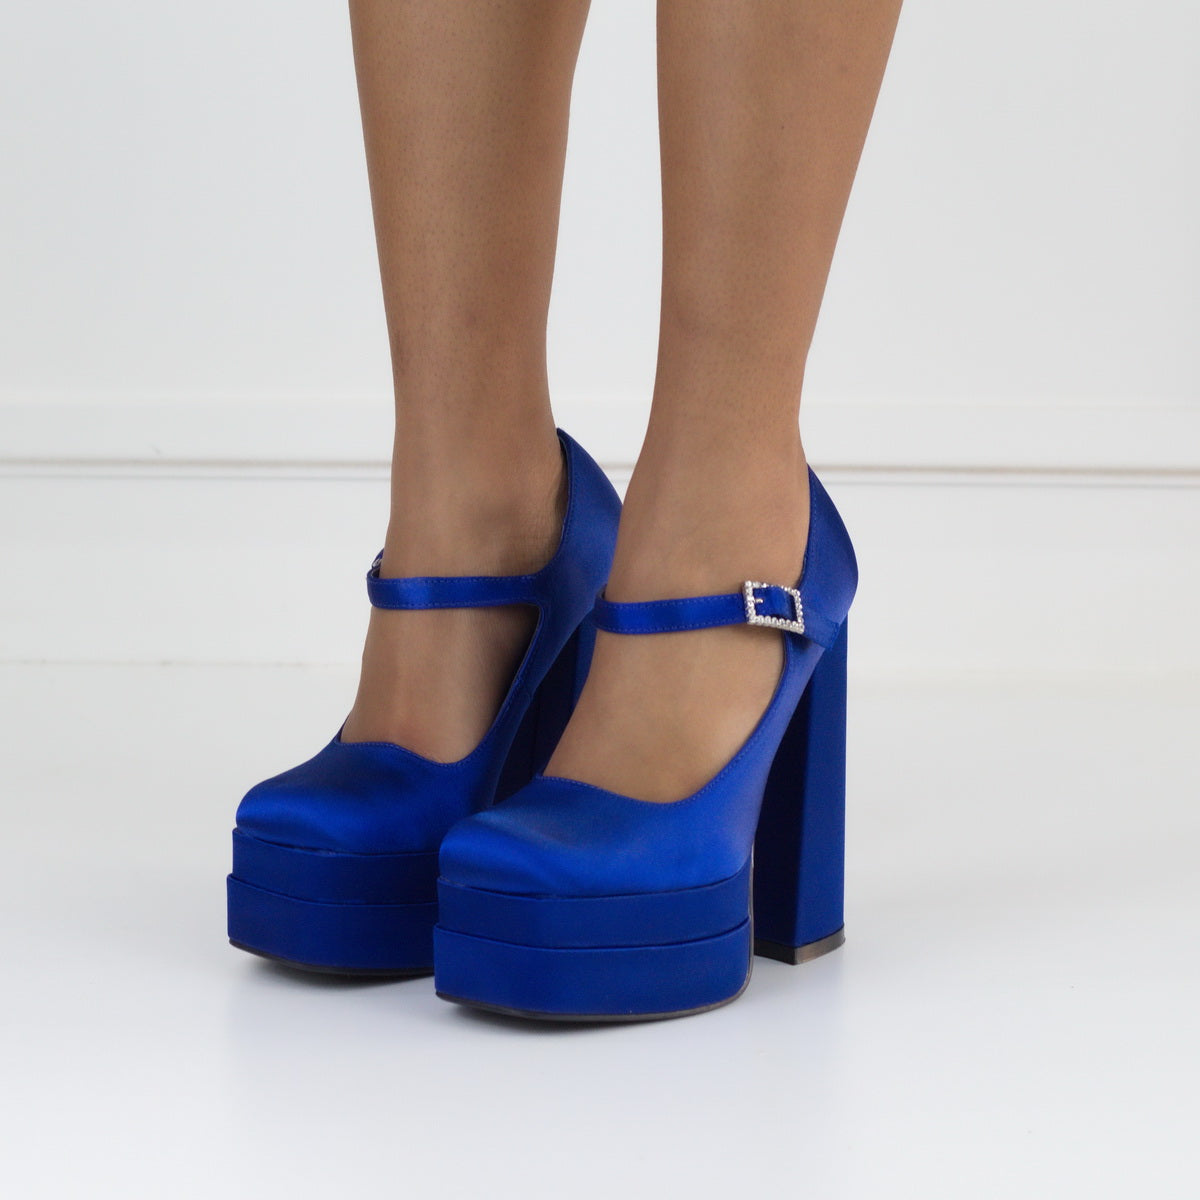 Royal blue 14.5cm platform heel Funky ankle strap pump pippa